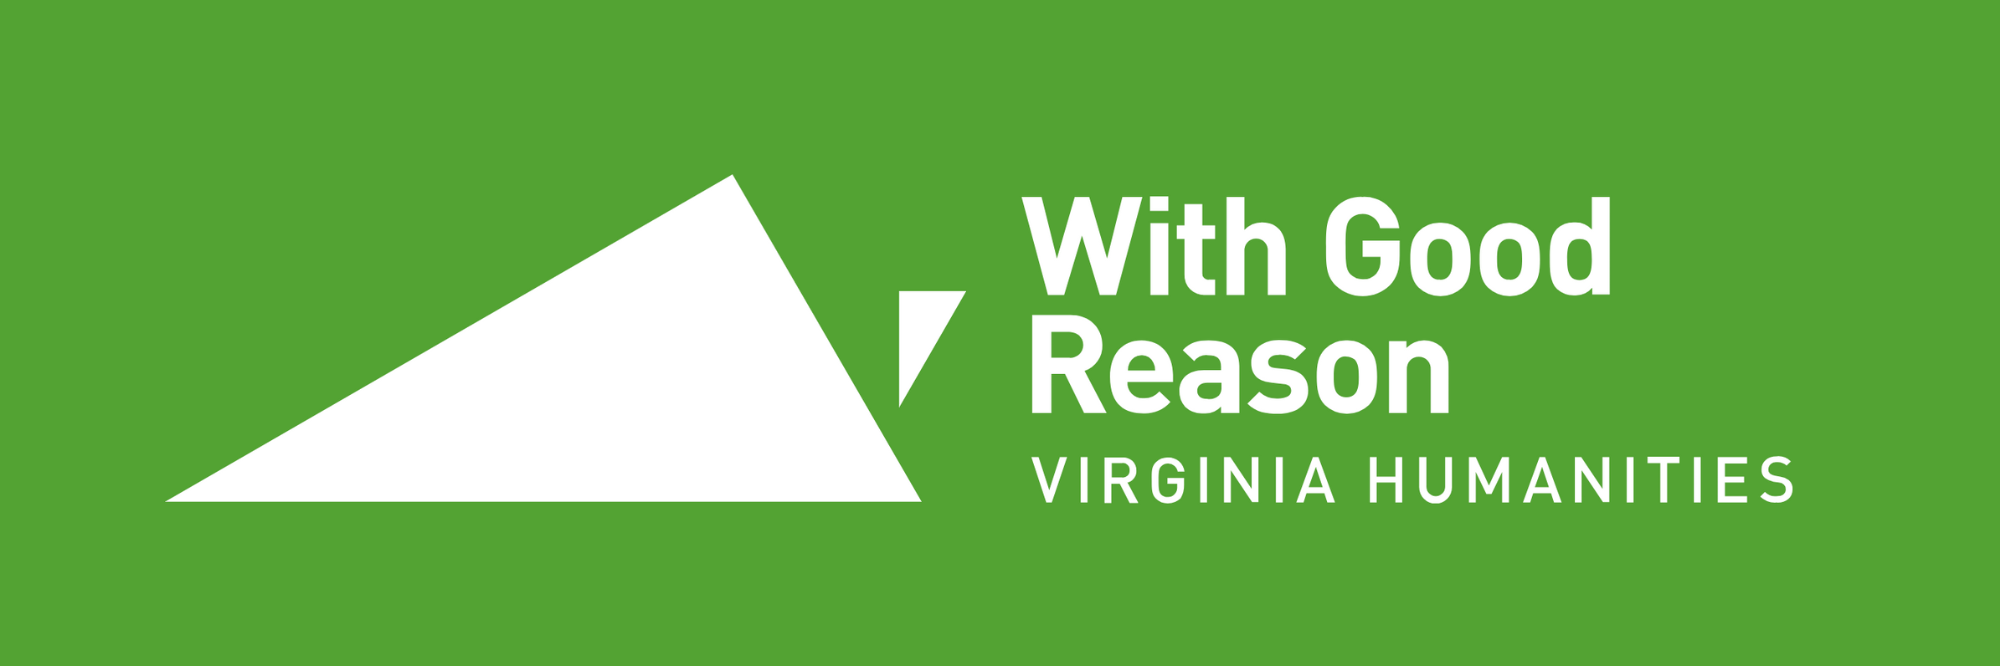 The Virginia Humanities With Good Reason logo